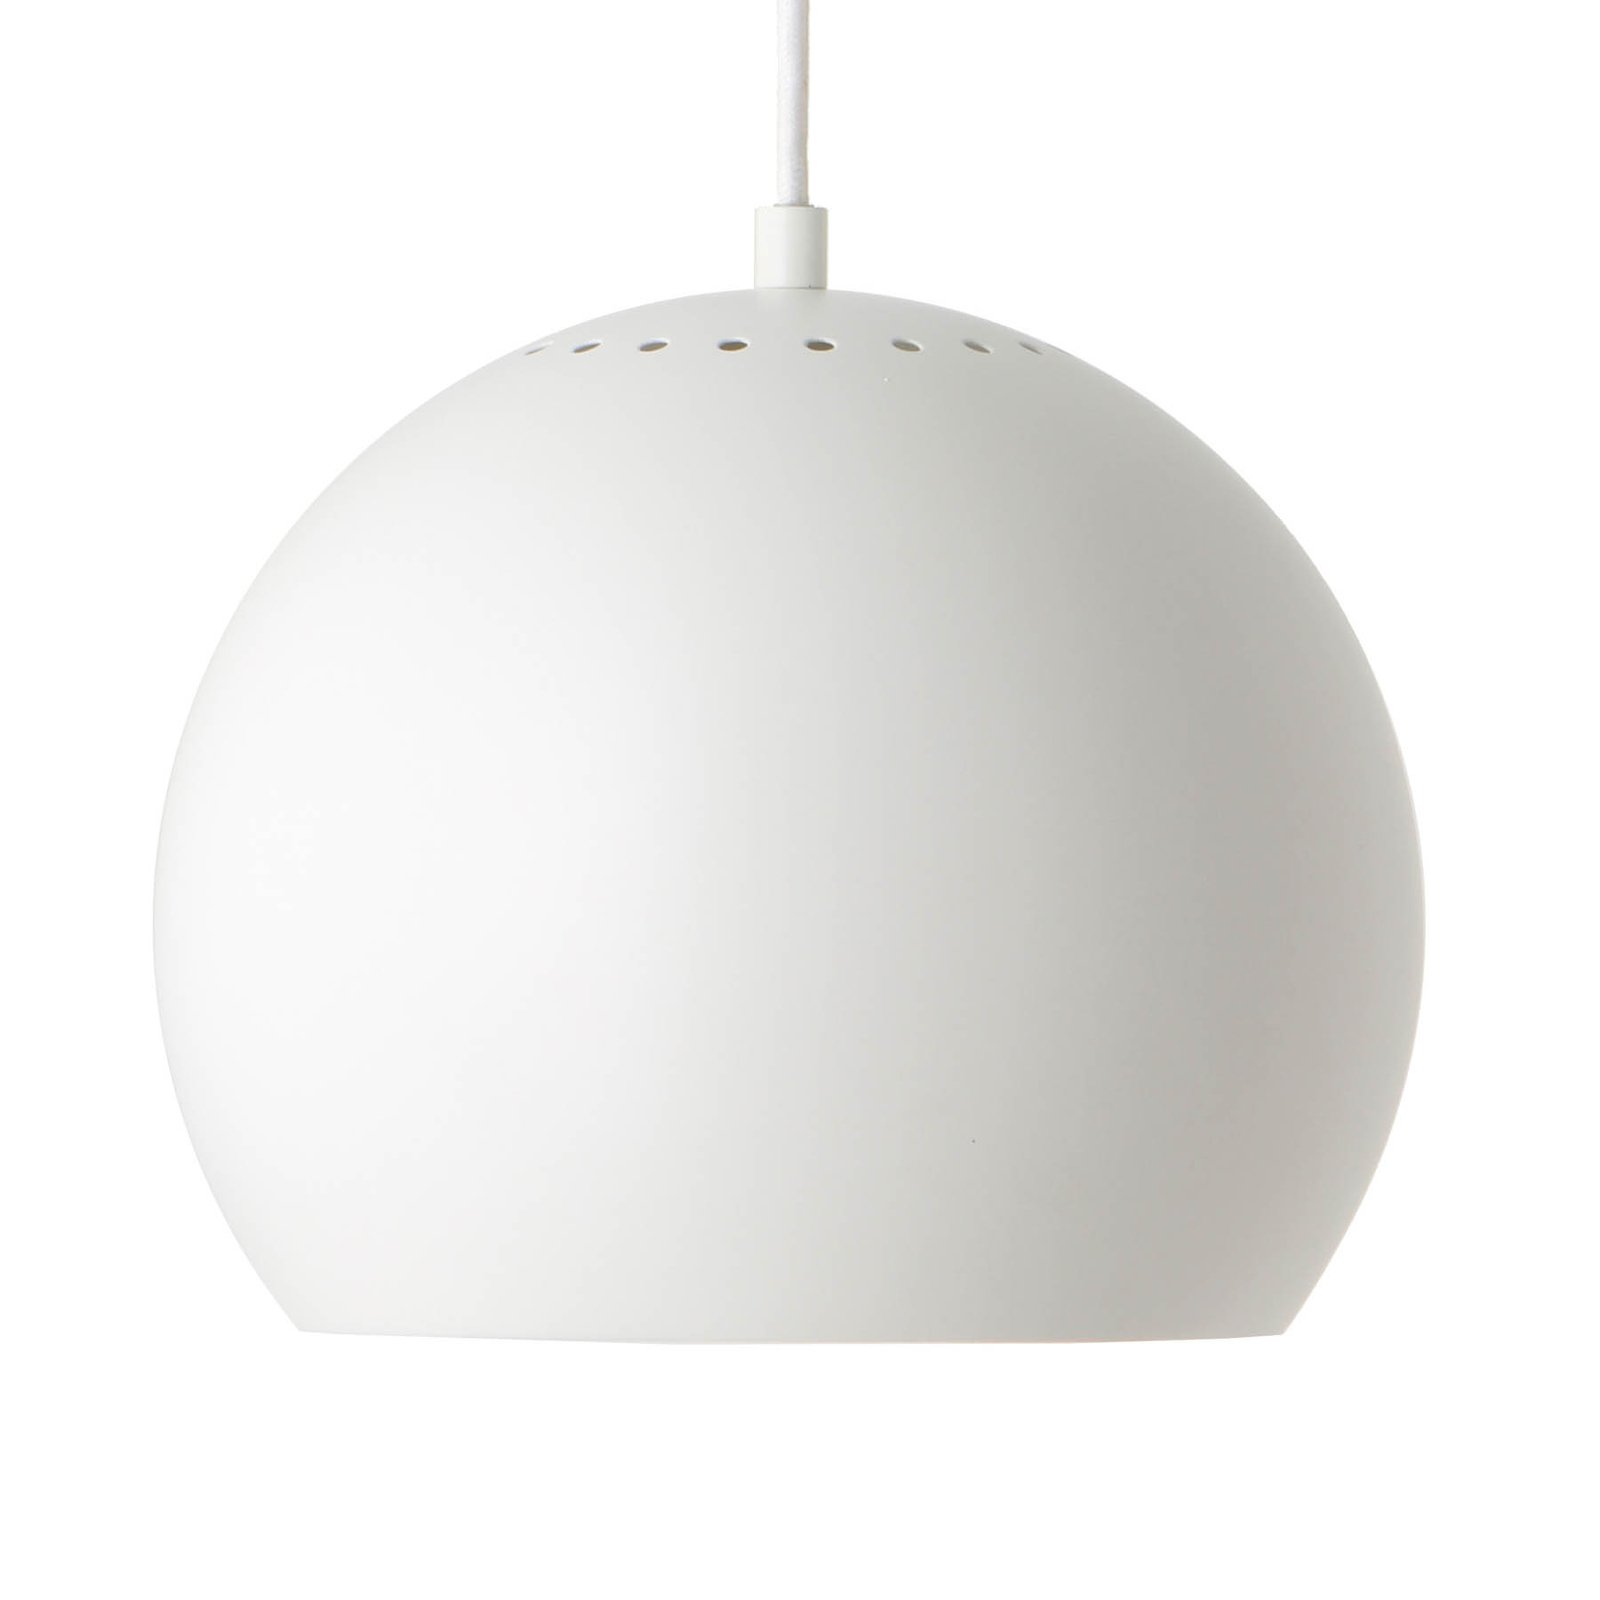 FRANDSEN gömb függő lámpa, Ø 25 cm, matt fehér